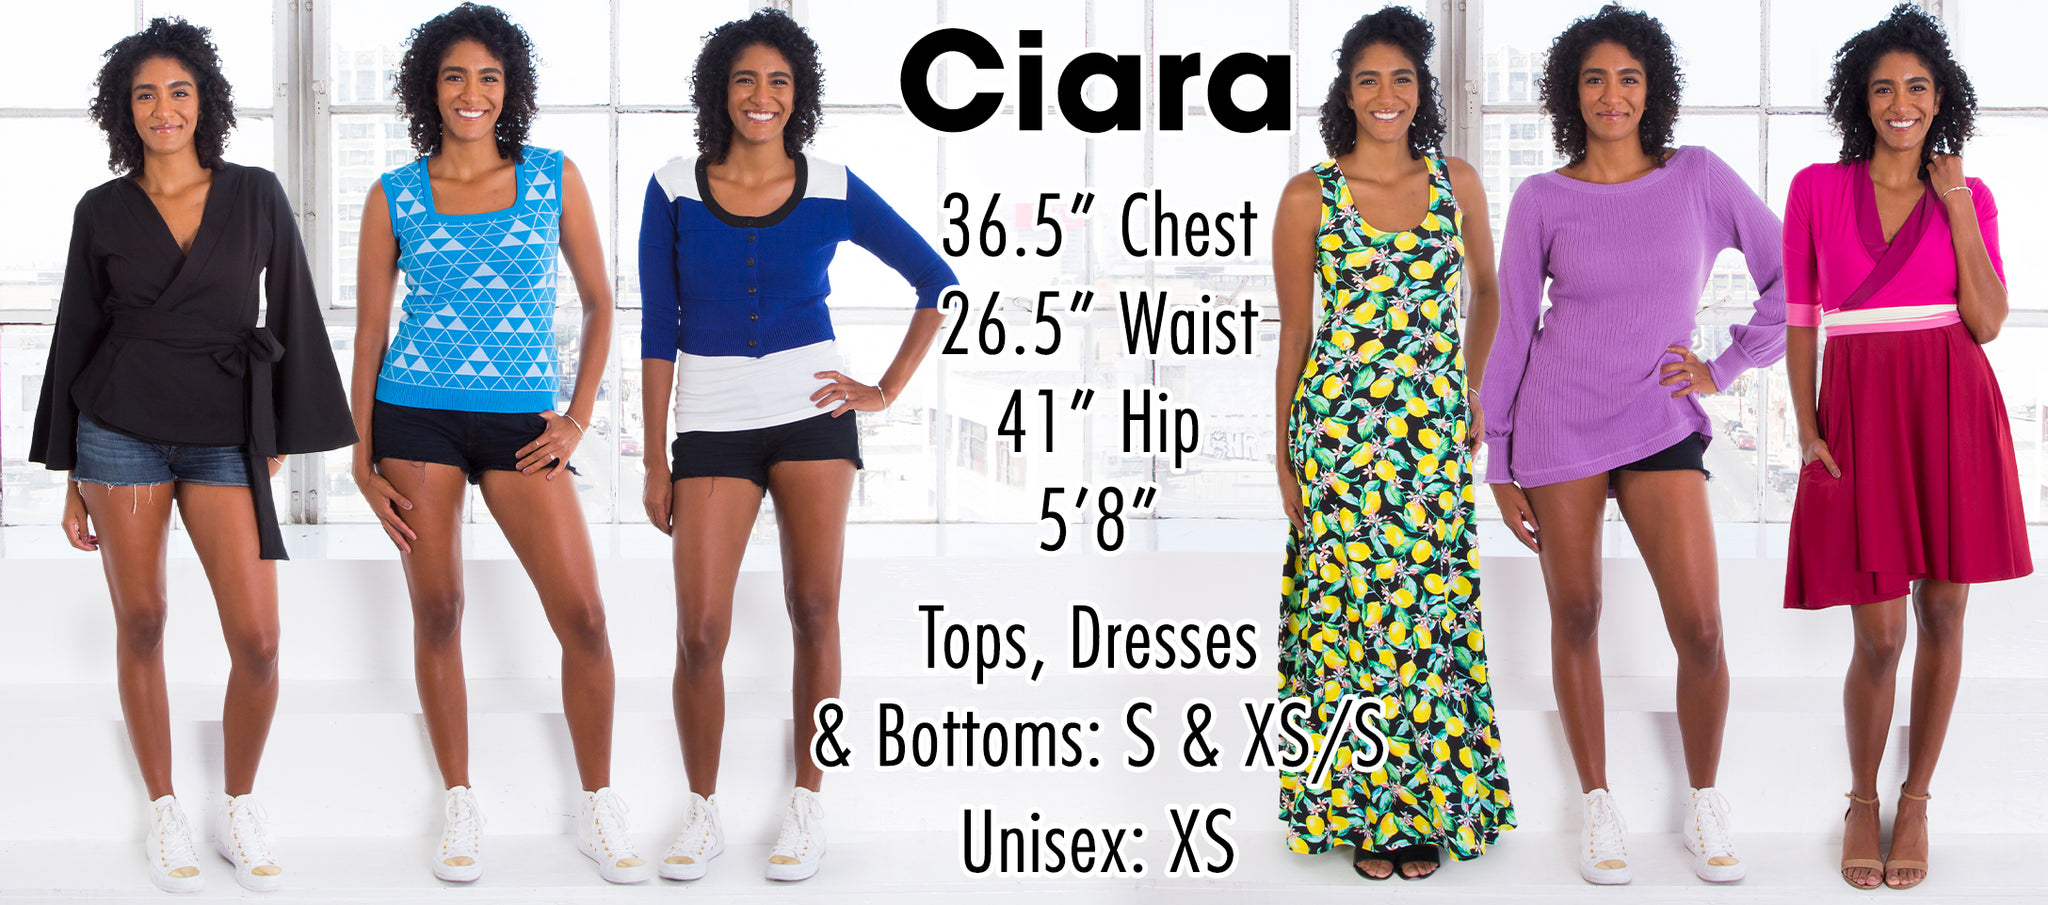 Ciara - 36.5” Chest 26.5” Waist 41” Hip 5’8” Height - Tops, Dresses & Bottoms: S & XS/S - Unisex: XS